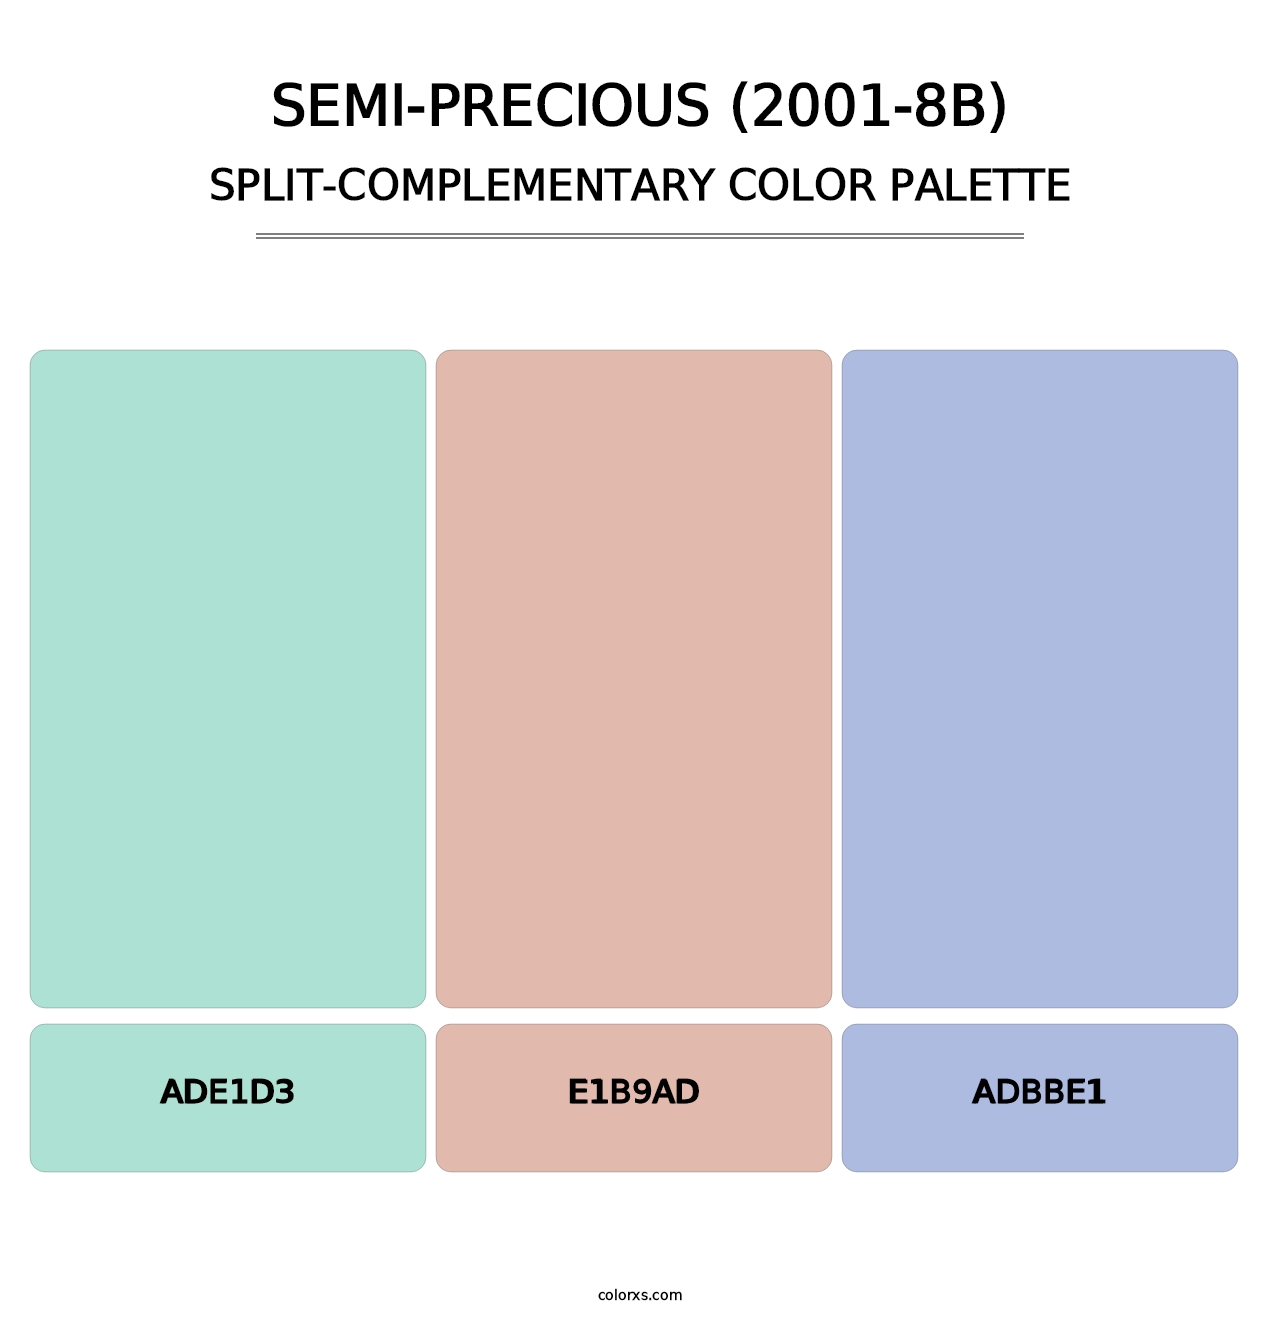 Semi-Precious (2001-8B) - Split-Complementary Color Palette